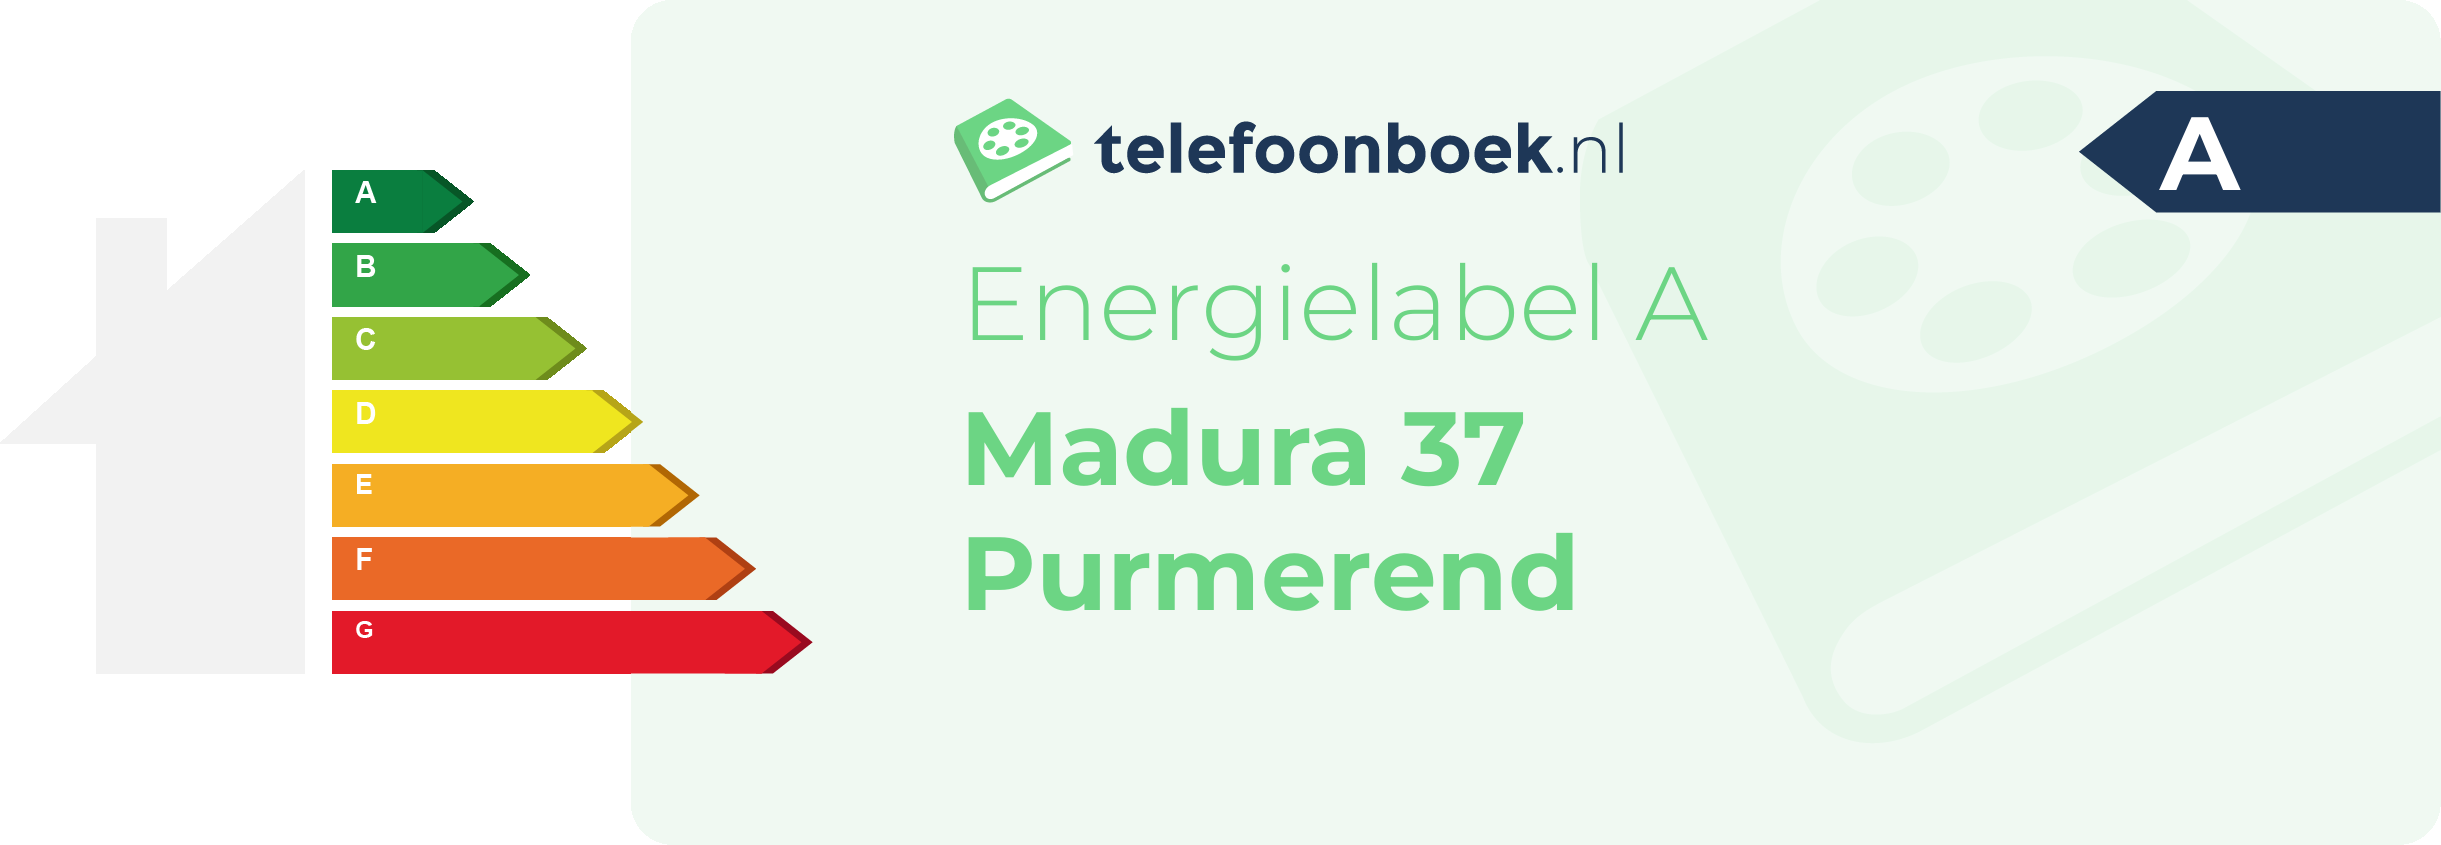 Energielabel Madura 37 Purmerend